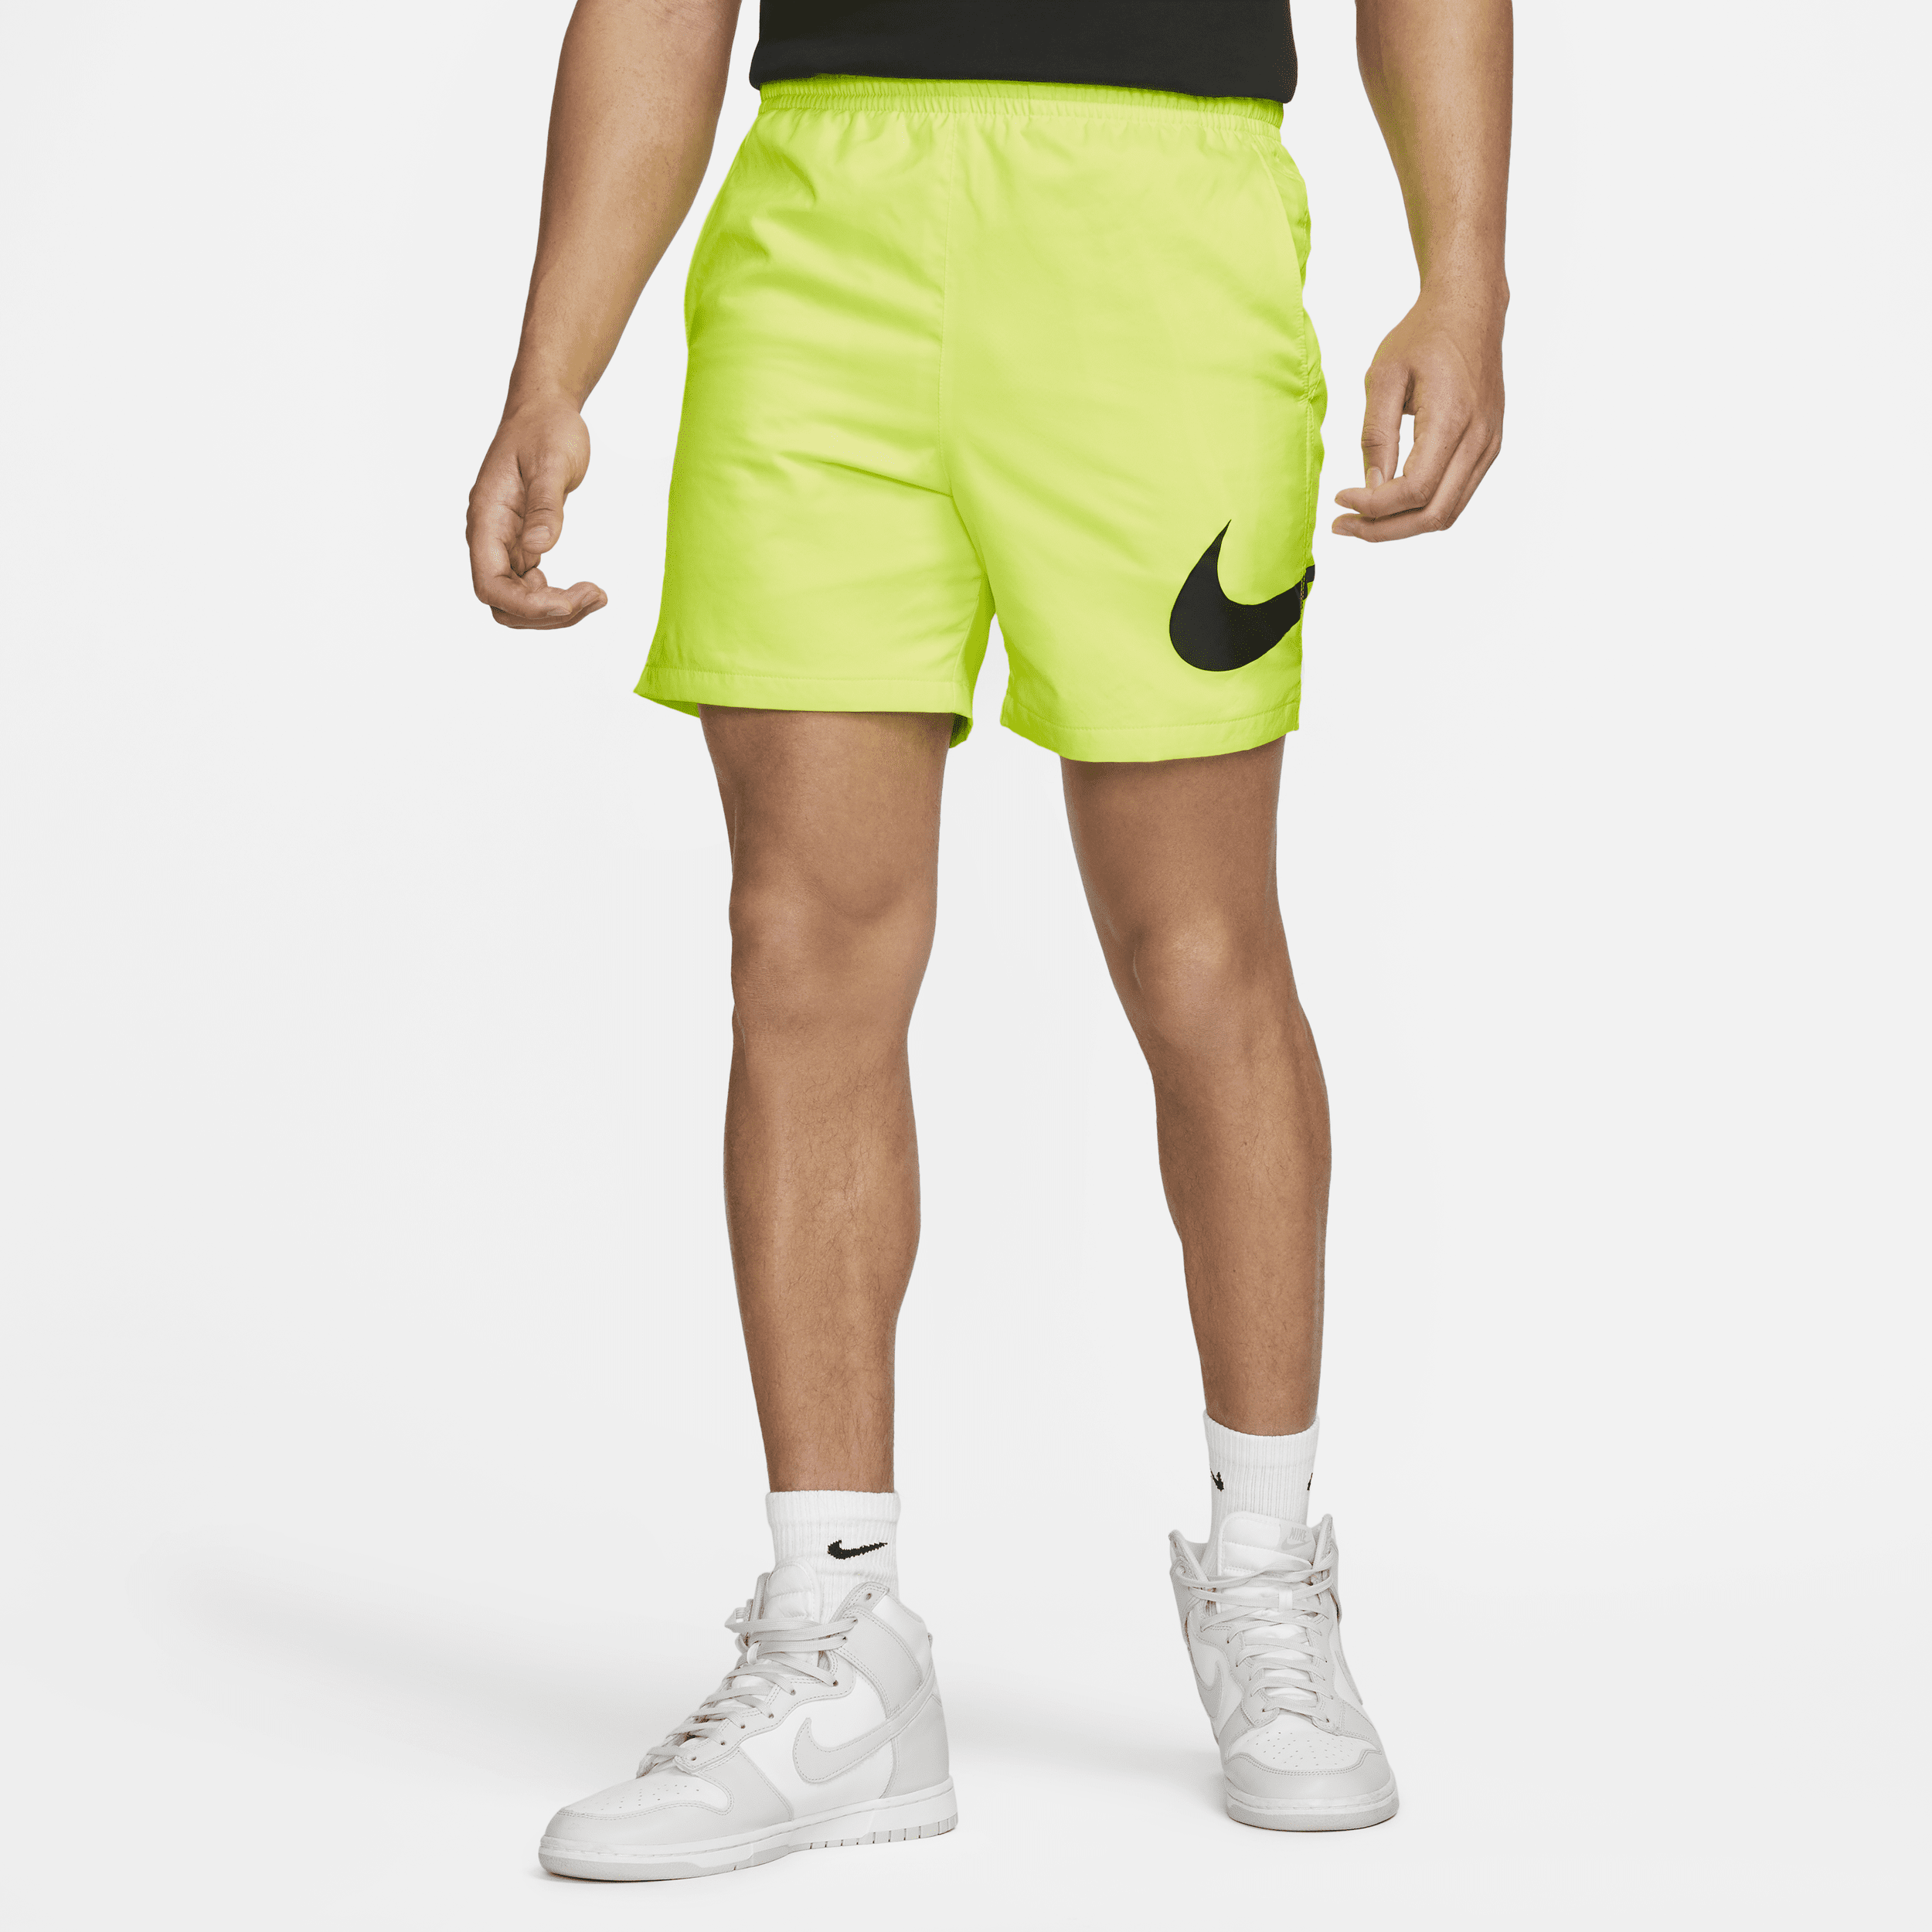 Shorts woven Nike Sportswear - Uomo - Giallo